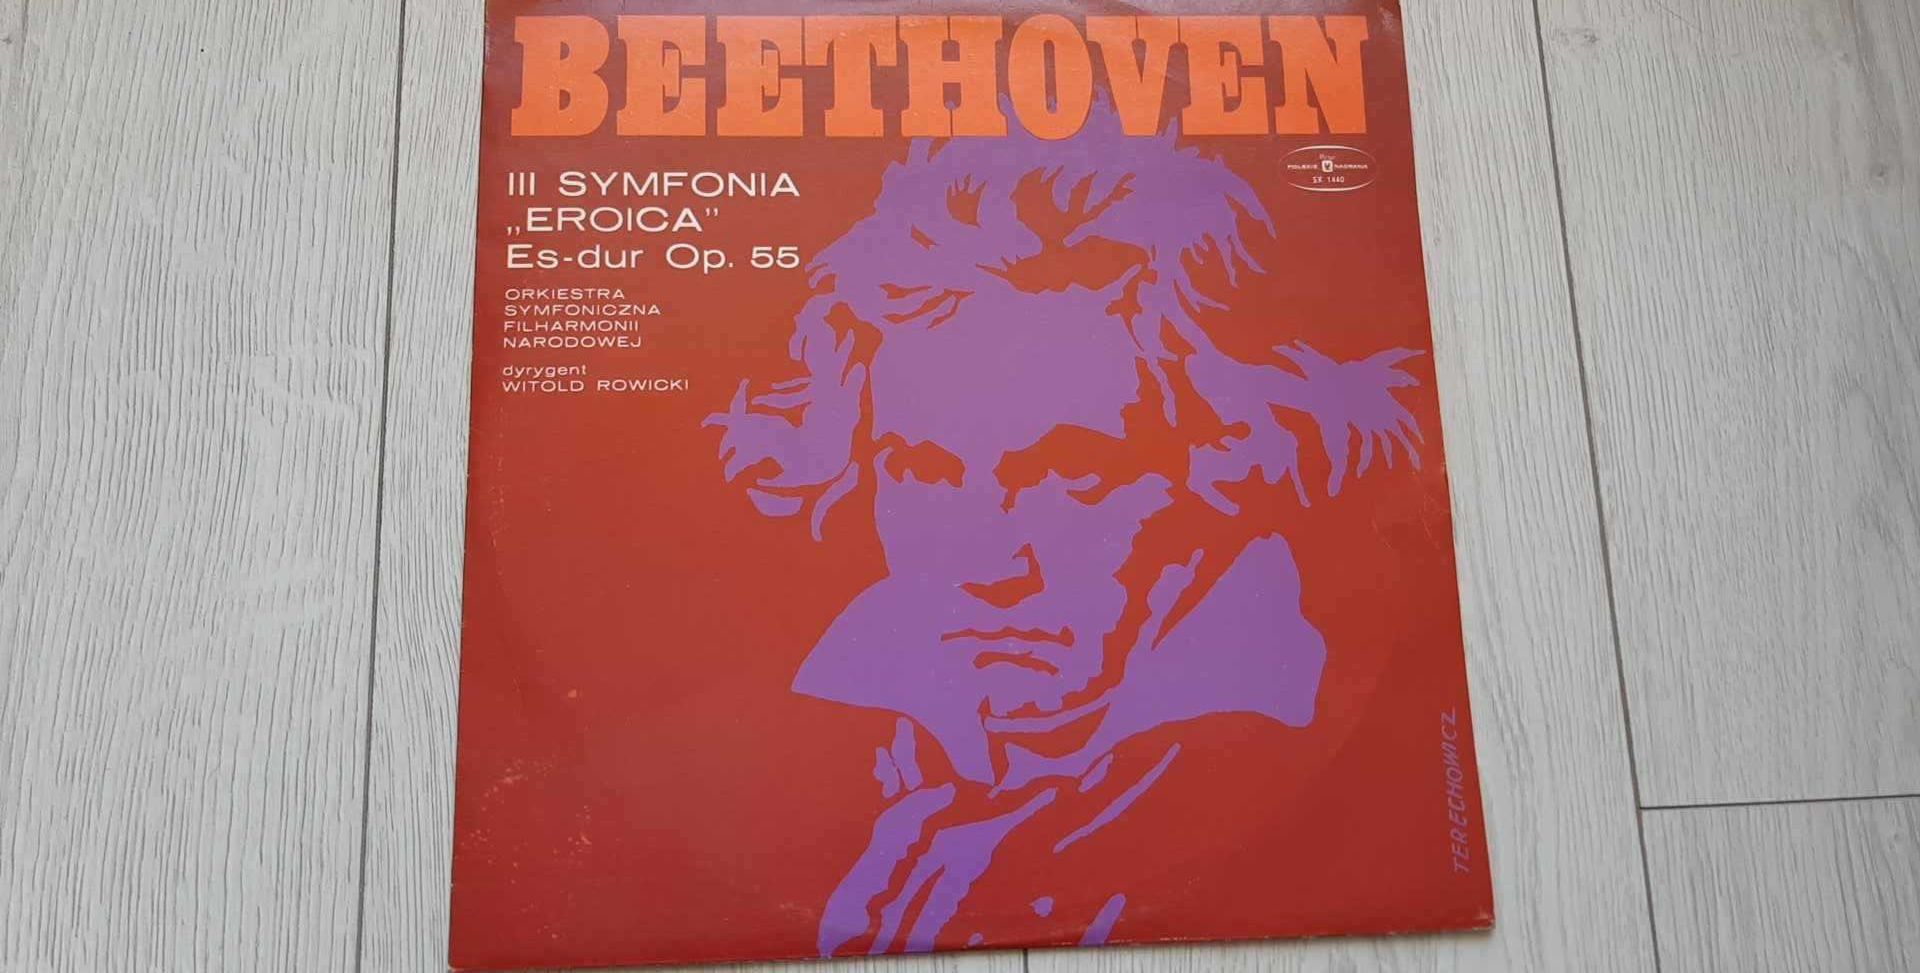 Beethoven / Rowicki III Symfonia Eroica - płyta winylowa